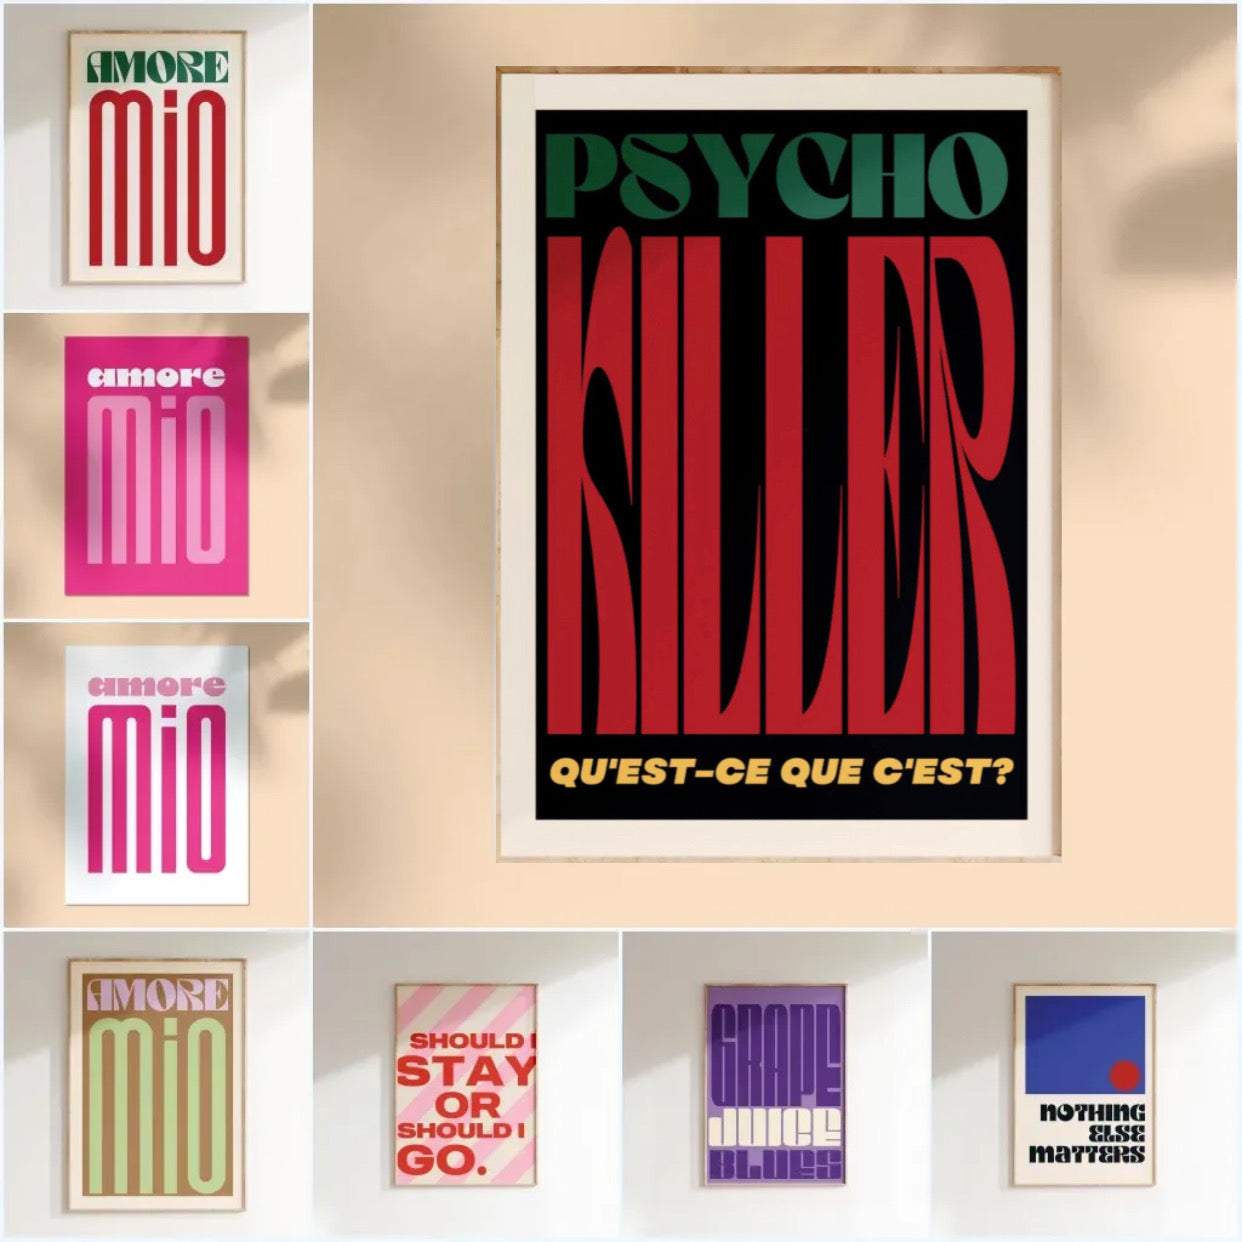 " psycho killer " poster